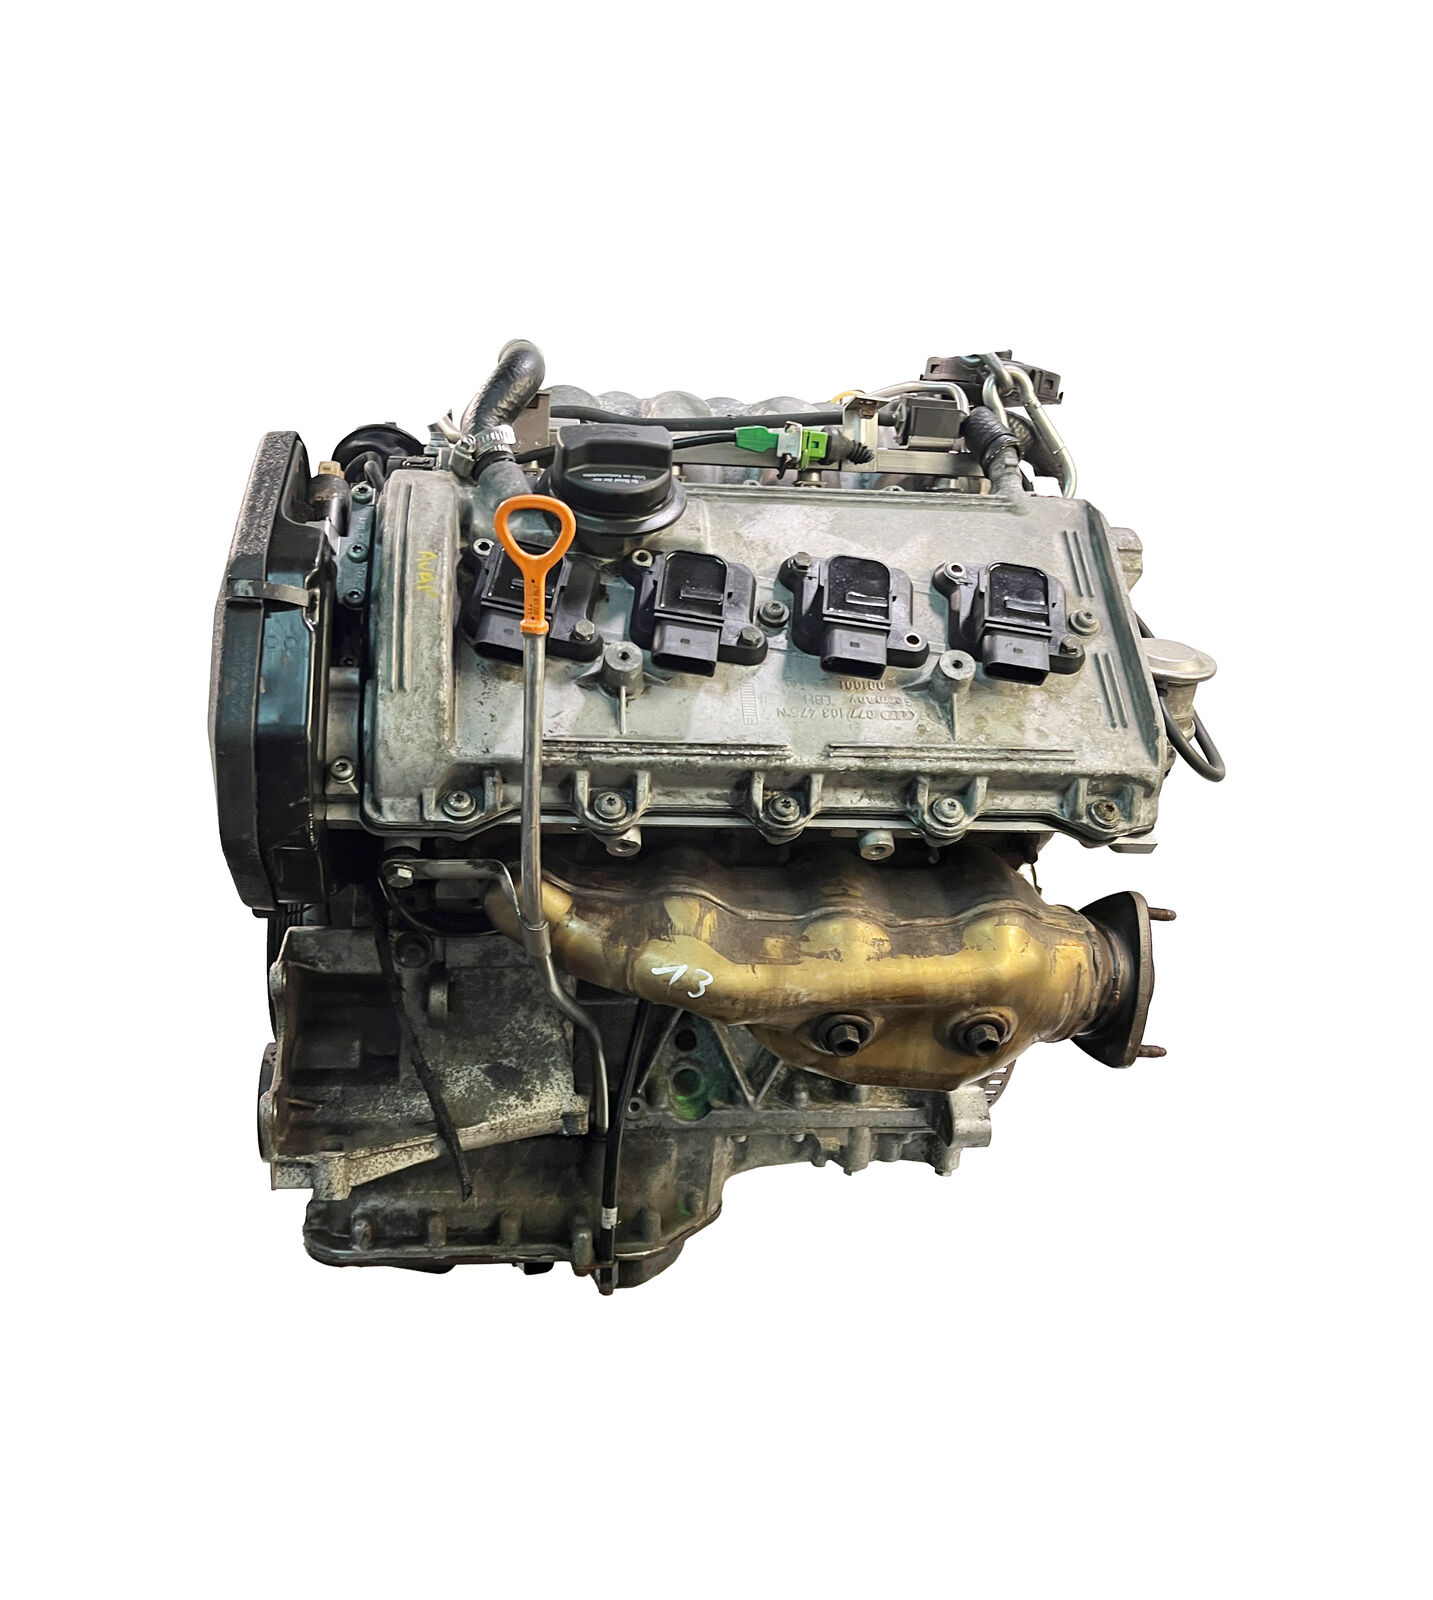 Engine for 2001 Audi A6 C5 4.2 V8 Quattro AWN Baugleich mit :ANK ARS 299HP